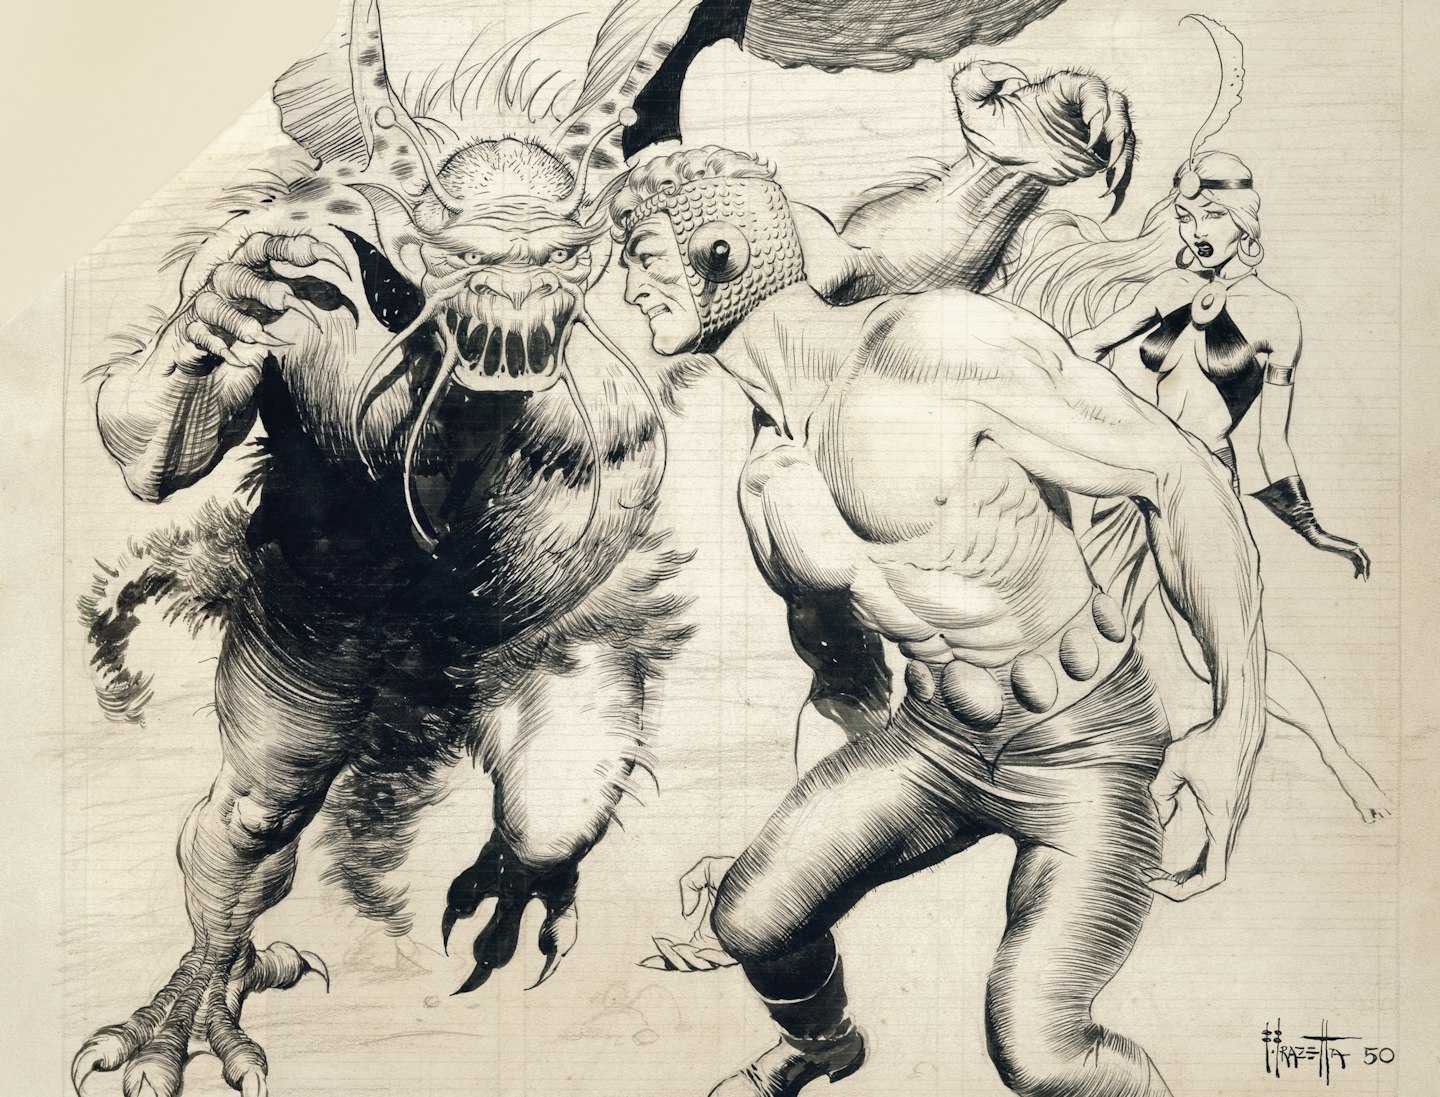 Flash Gordon / Monster of Mongo by Frank Frazetta